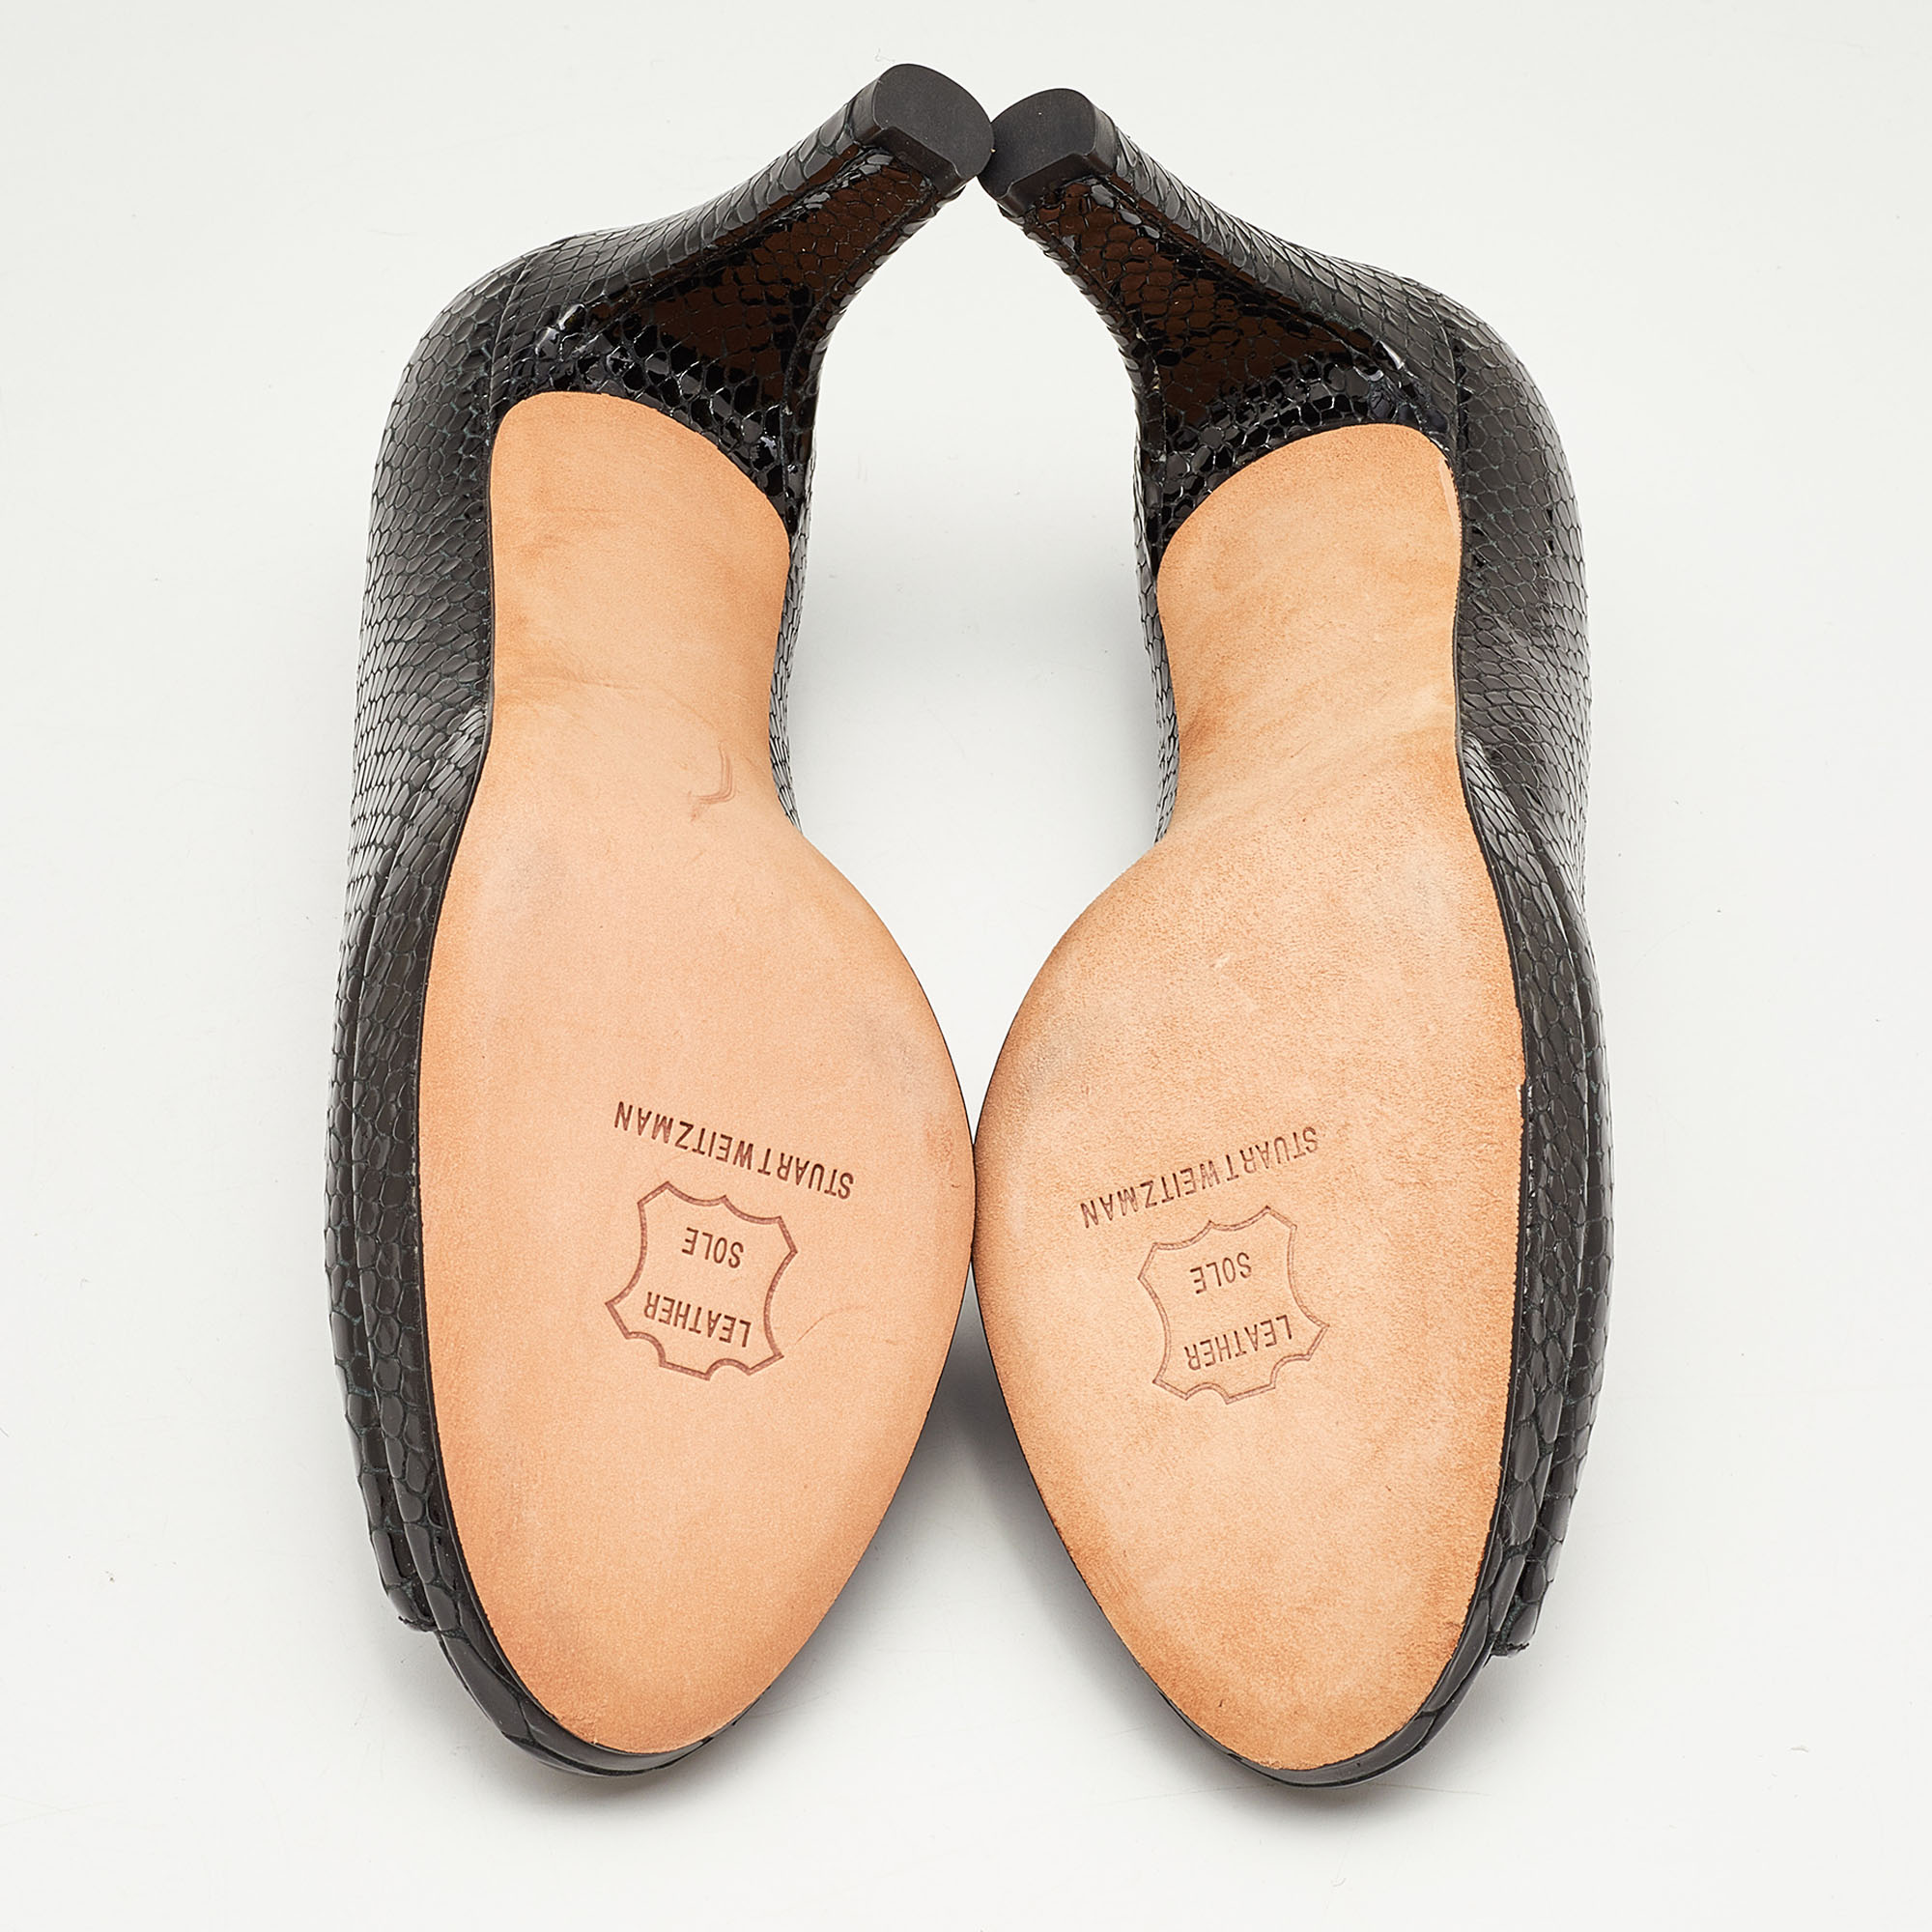 Stuart Weitzman Black Python Embossed Leather Peep Toe Pumps Size 36.5